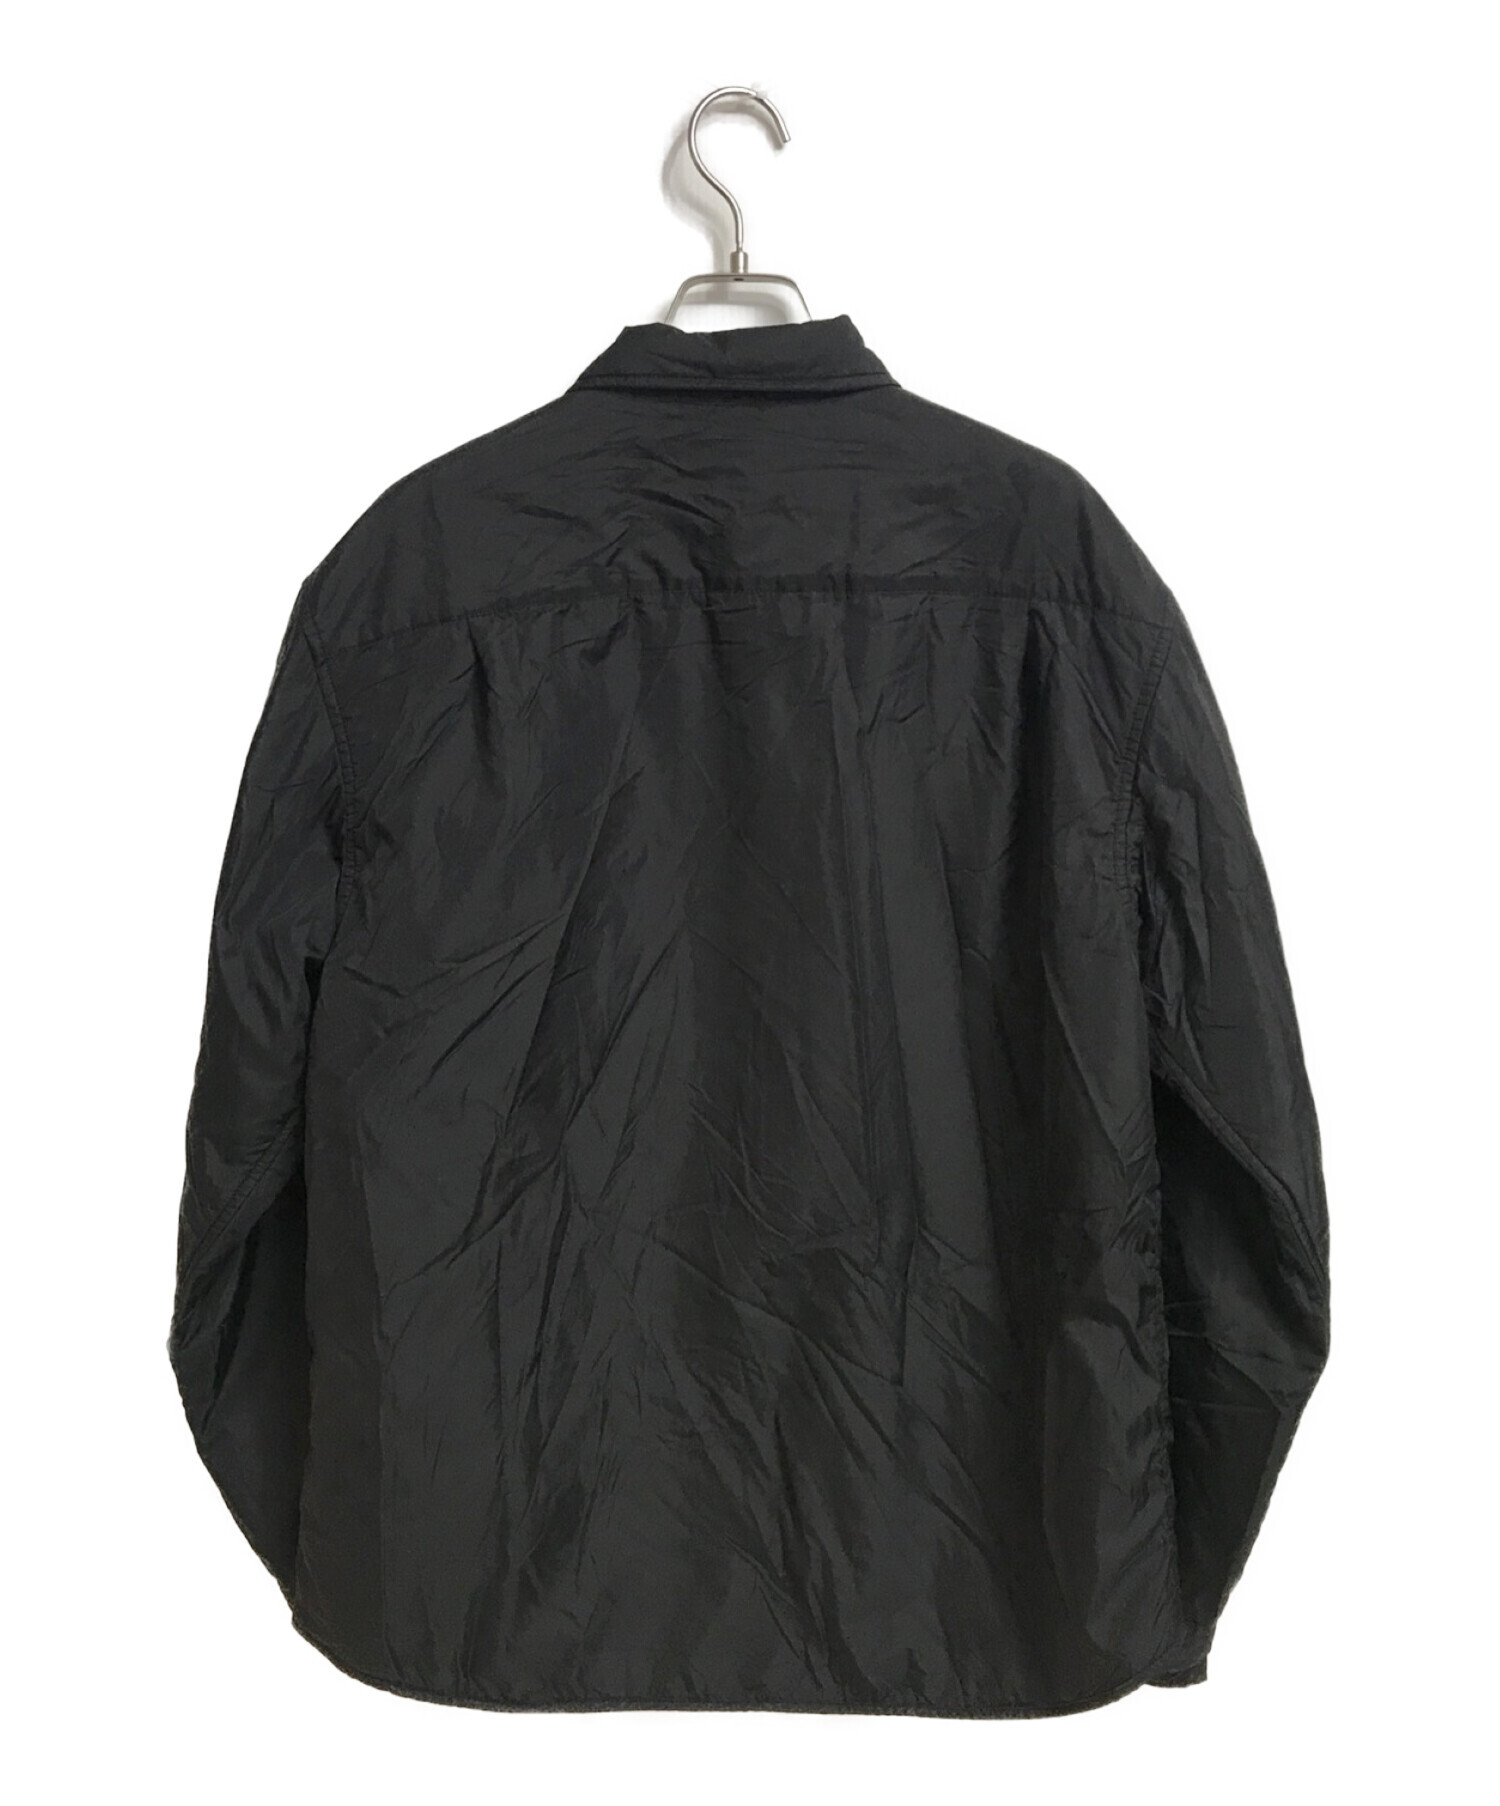 SUPREME 22AW Nylon Fille Shirt ブラック購入価格30000円程度